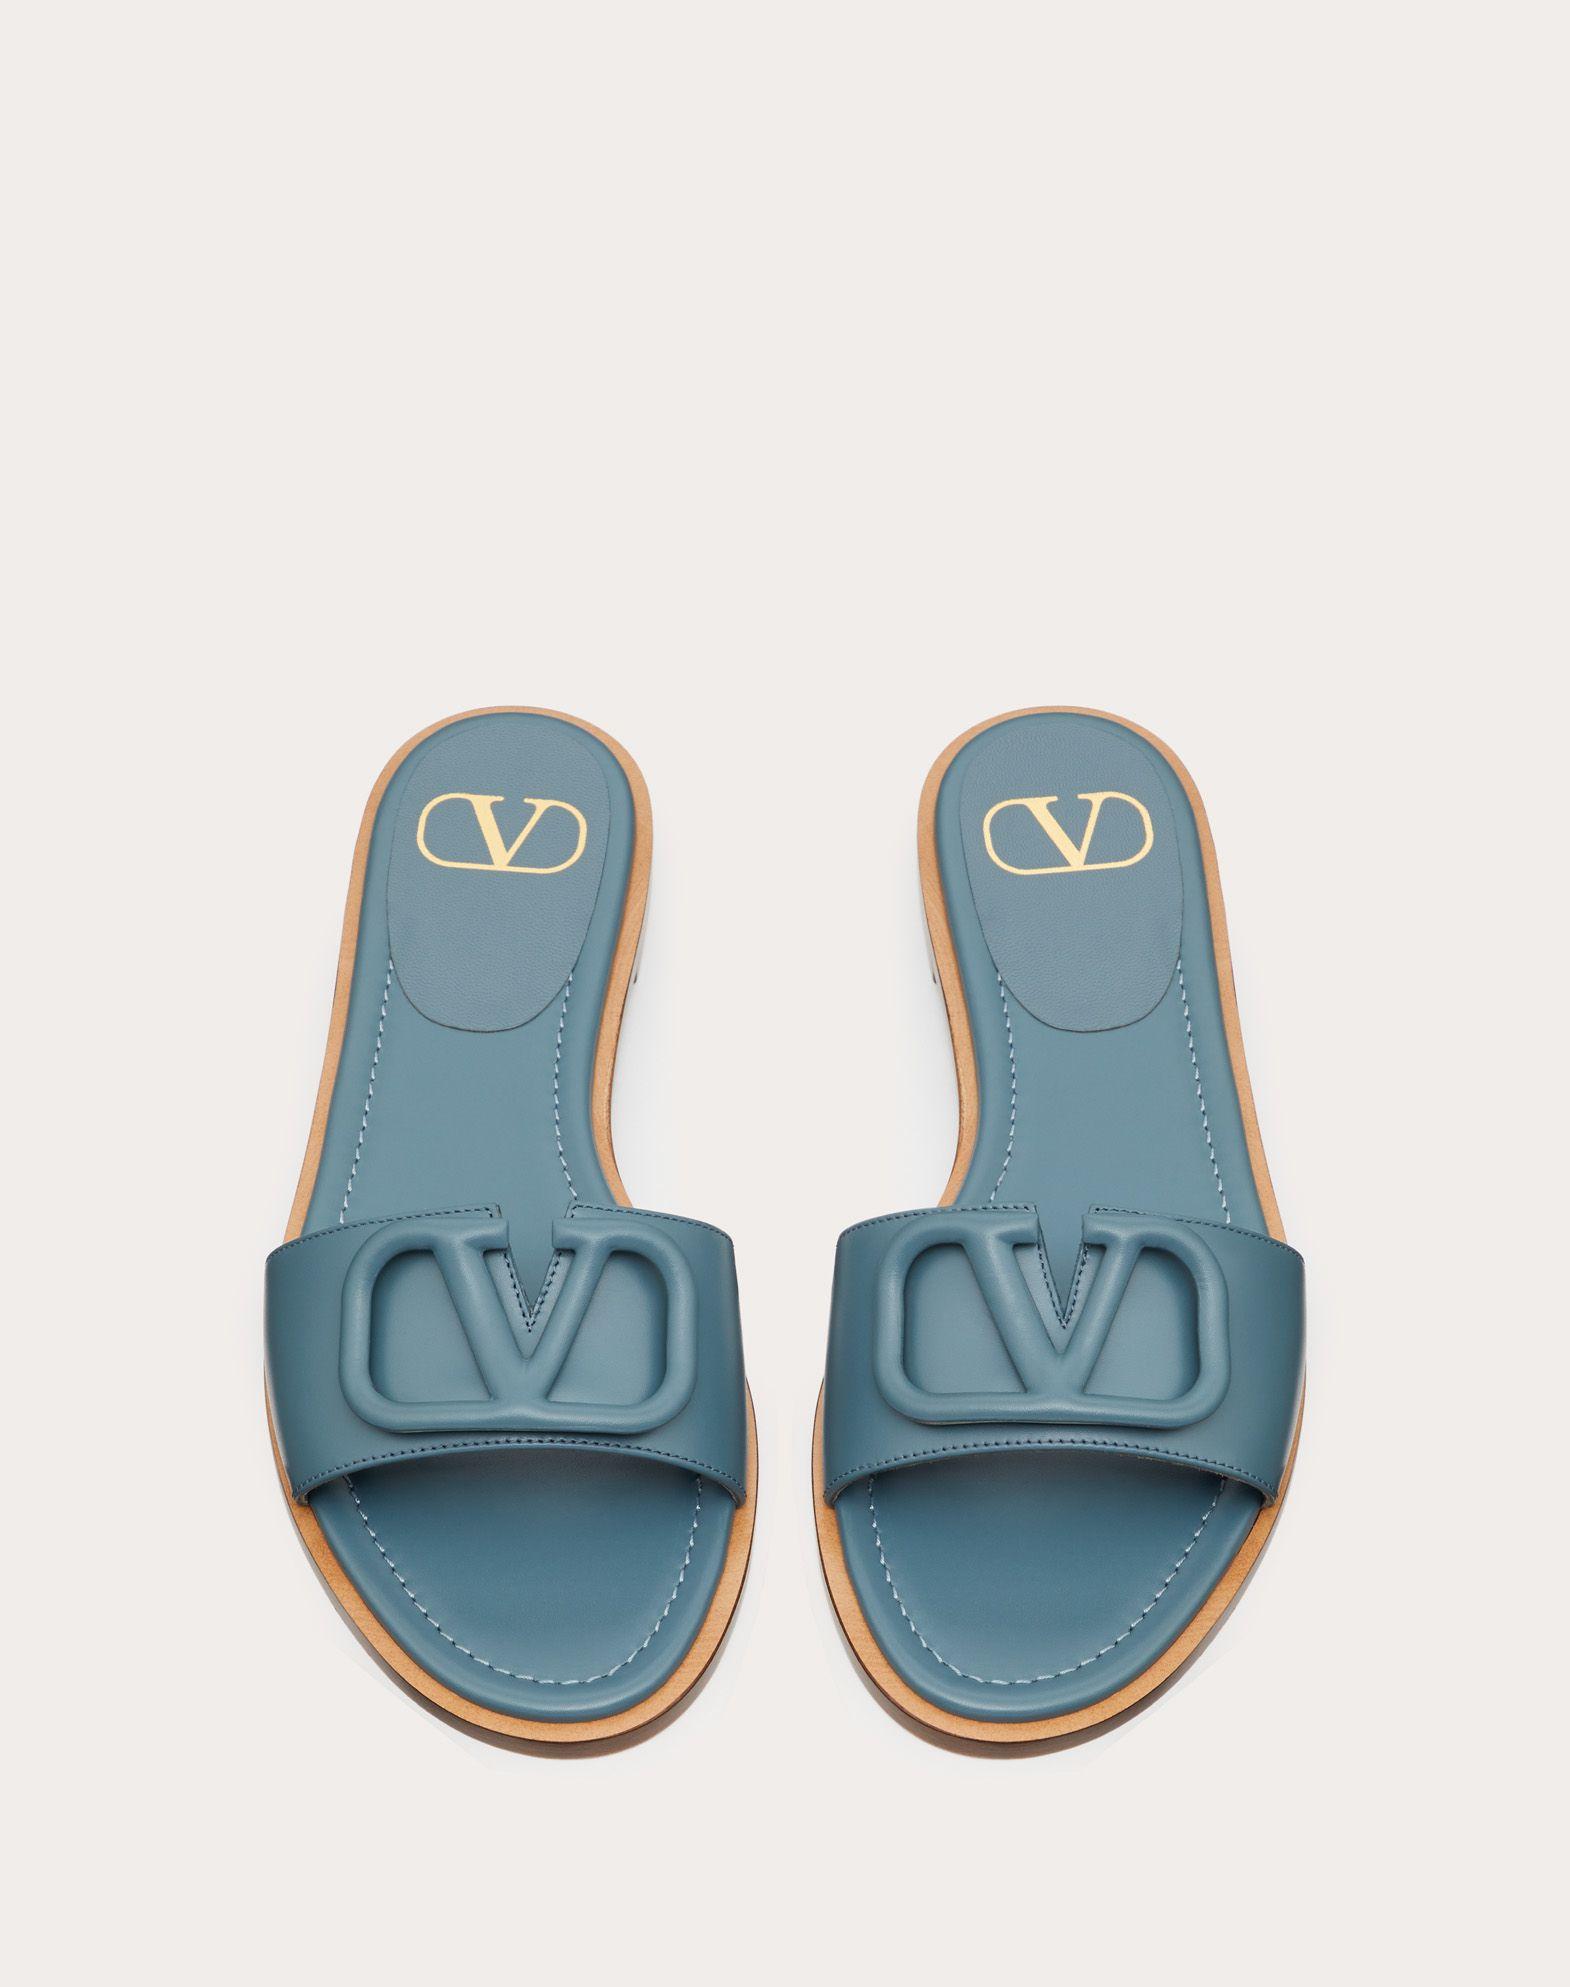 Valentino Vlogo Sandals Flash Sales, UP TO 63% OFF | www.ldeventos.com